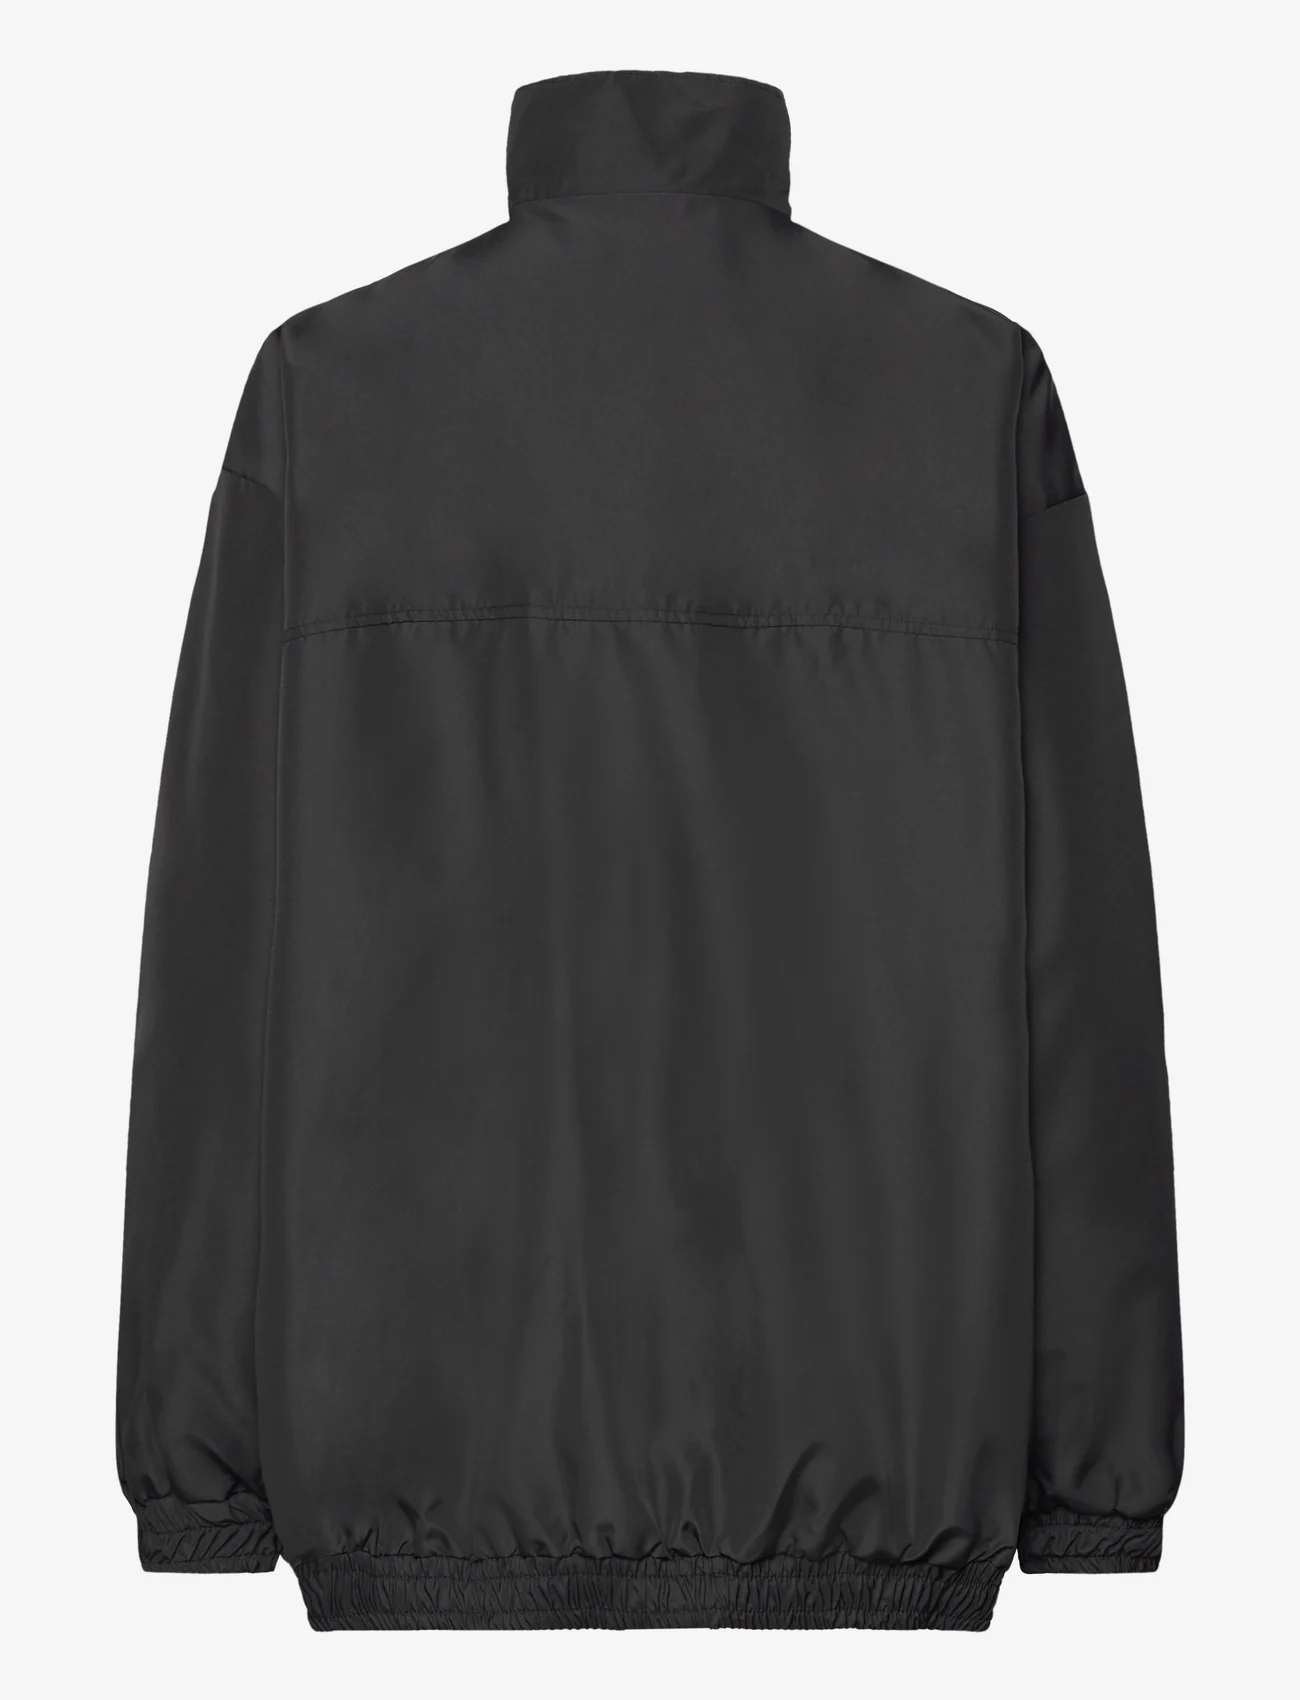 H2O Fagerholt - Windy jacket - forårsjakker - black - 1